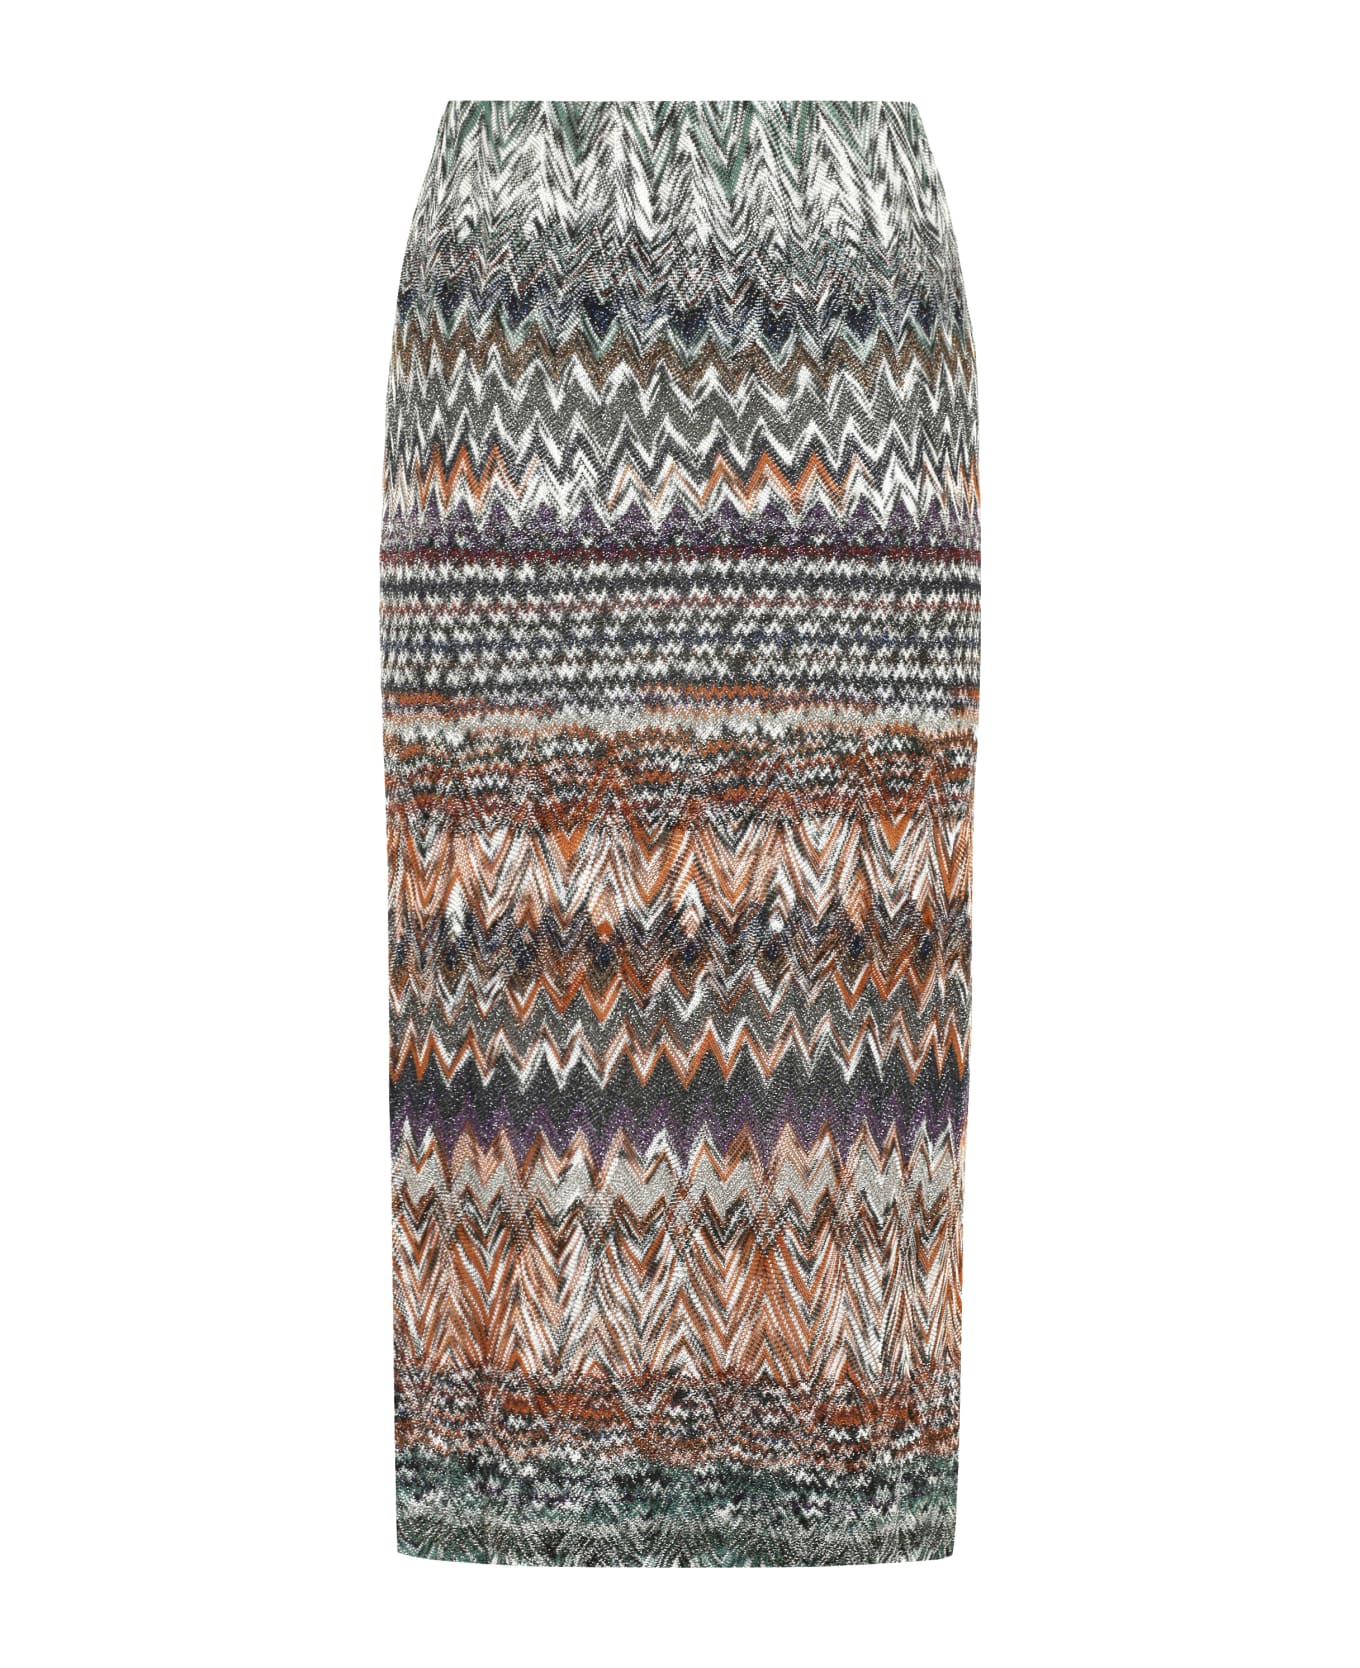 Missoni Chevron Motif Knitted Skirt - Multicolor スカート